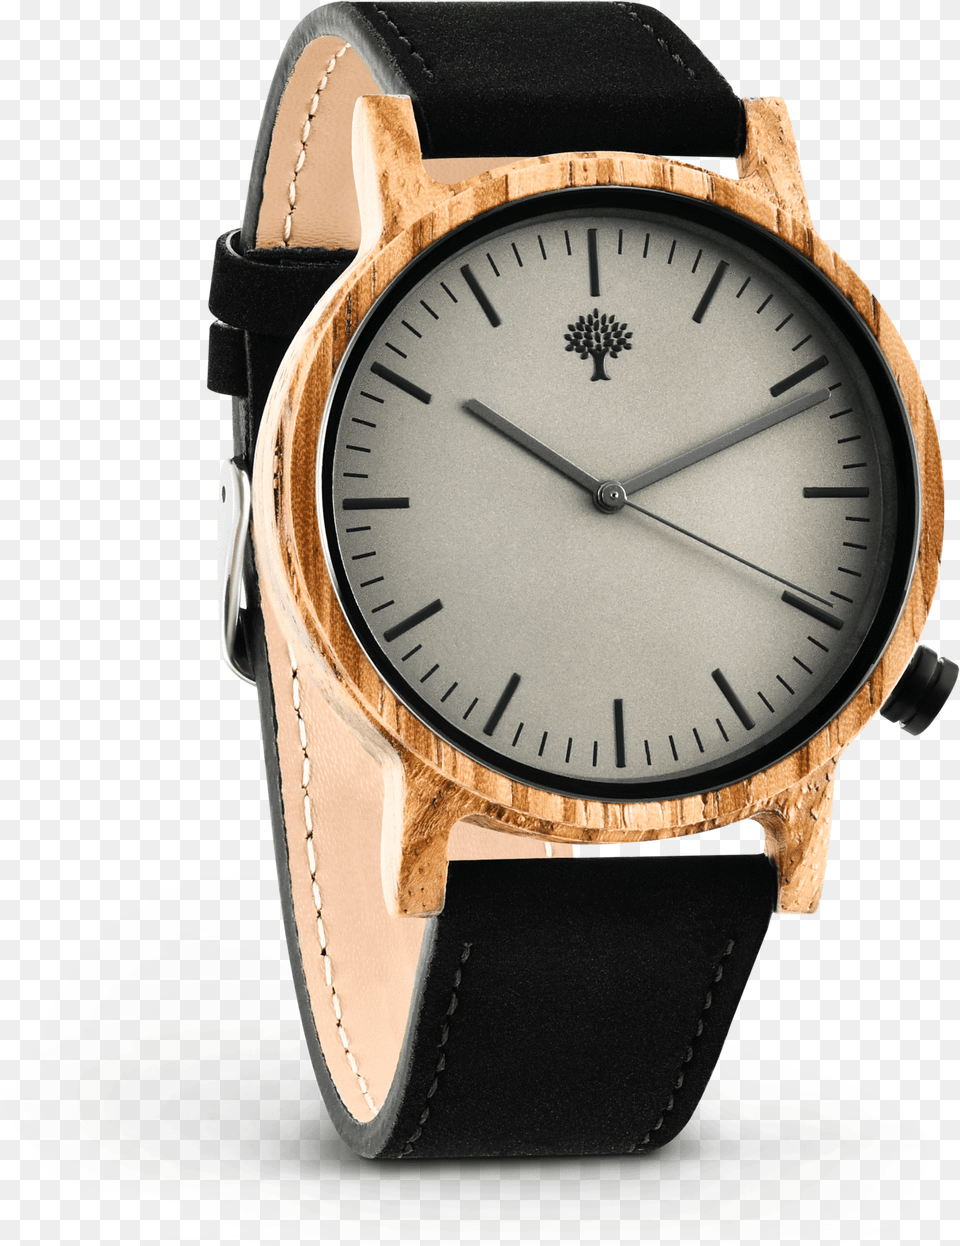 The Gaston Wood Watch Zebra Wood Black Leather Analog Watch, Arm, Body Part, Person, Wristwatch Png Image